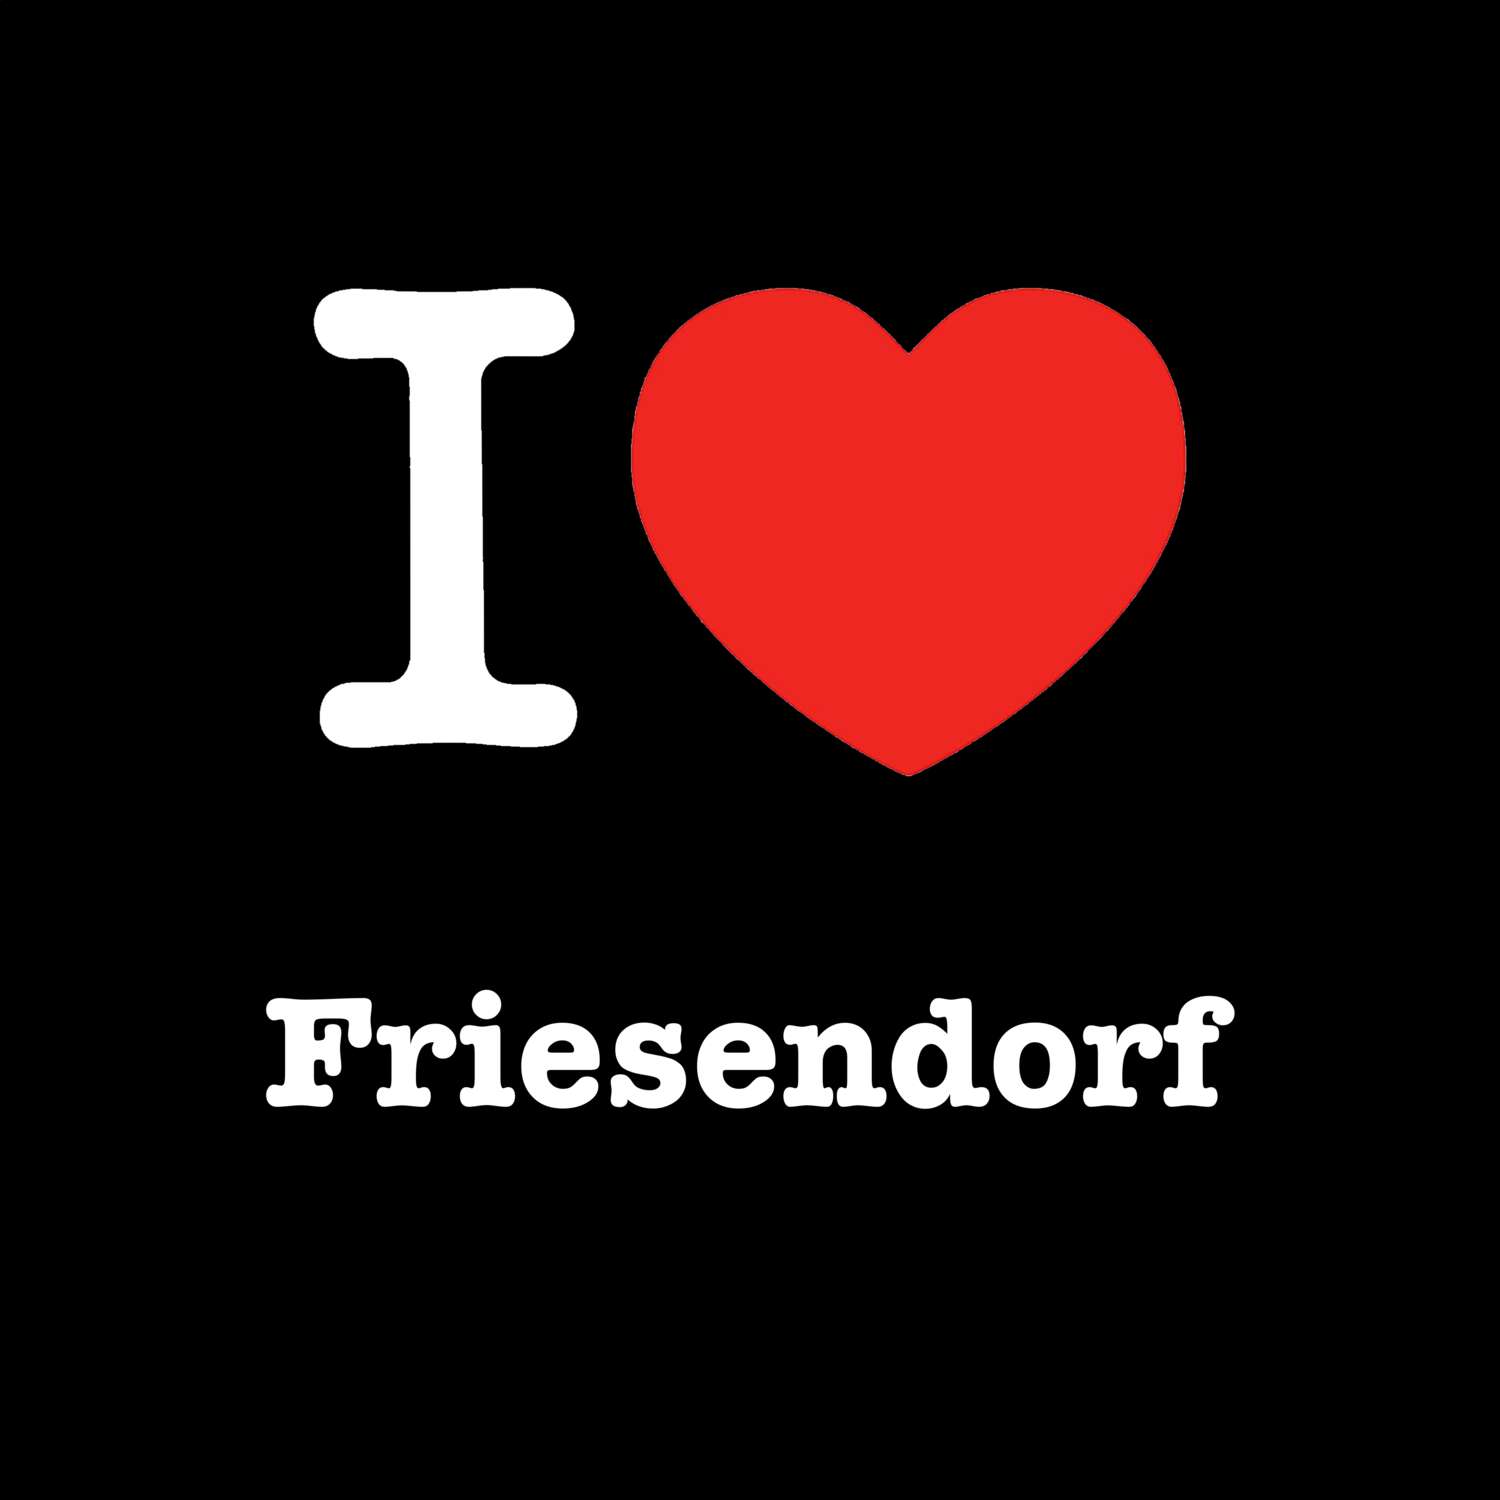 Friesendorf T-Shirt »I love«